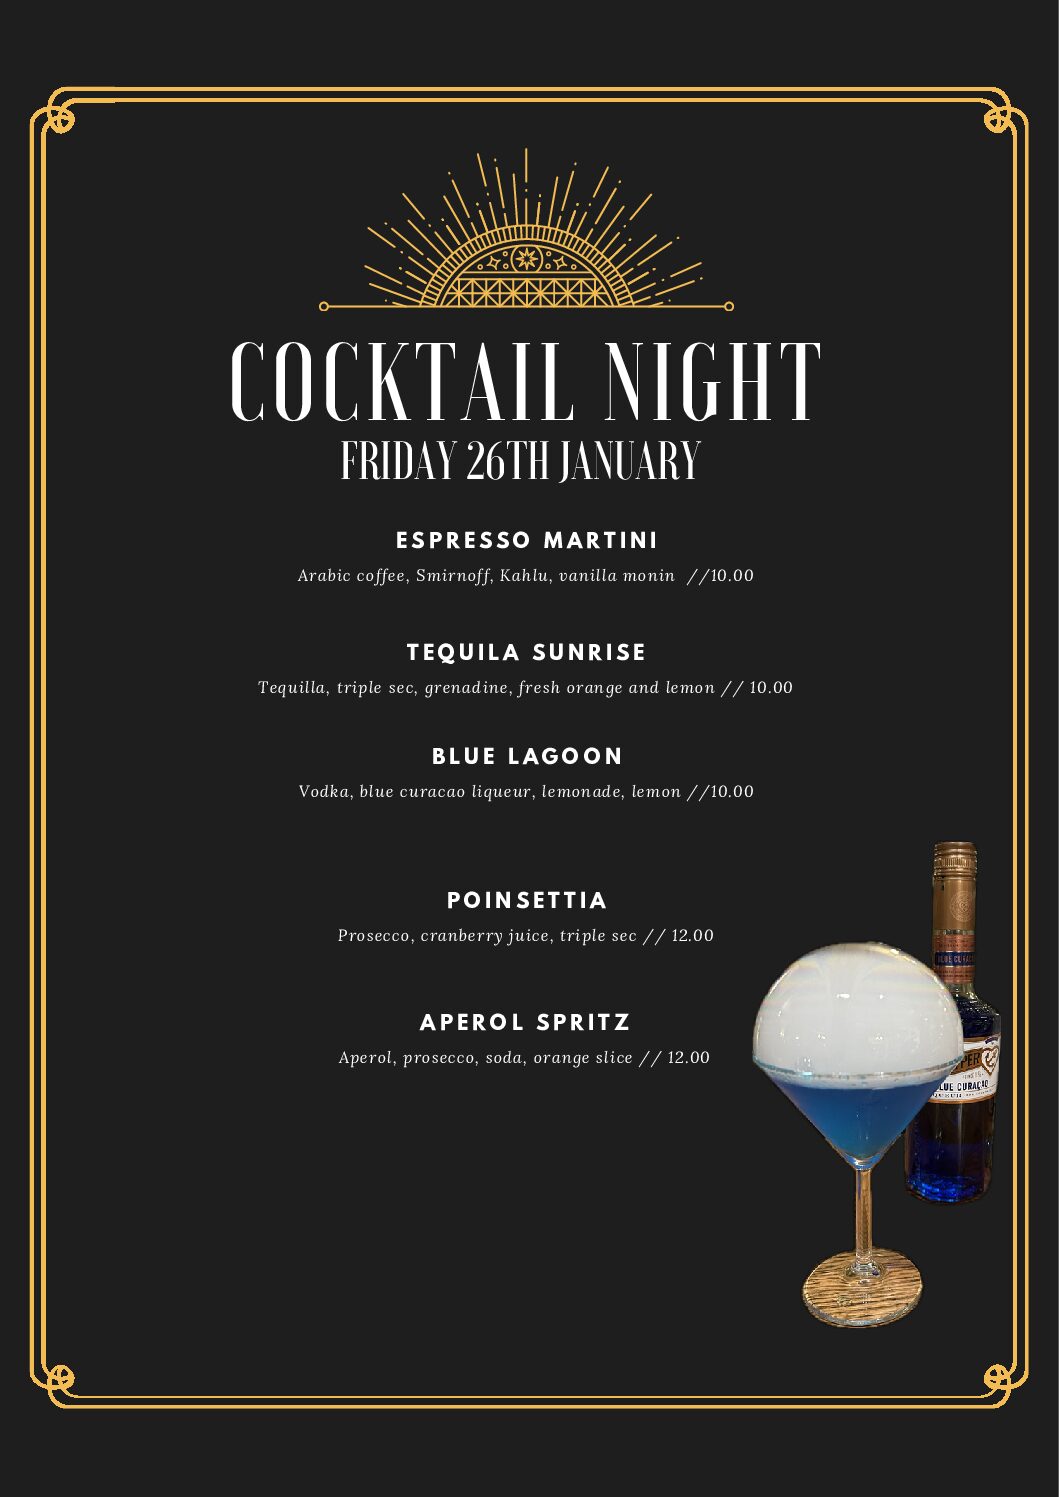 Friday Night Cocktail Night!